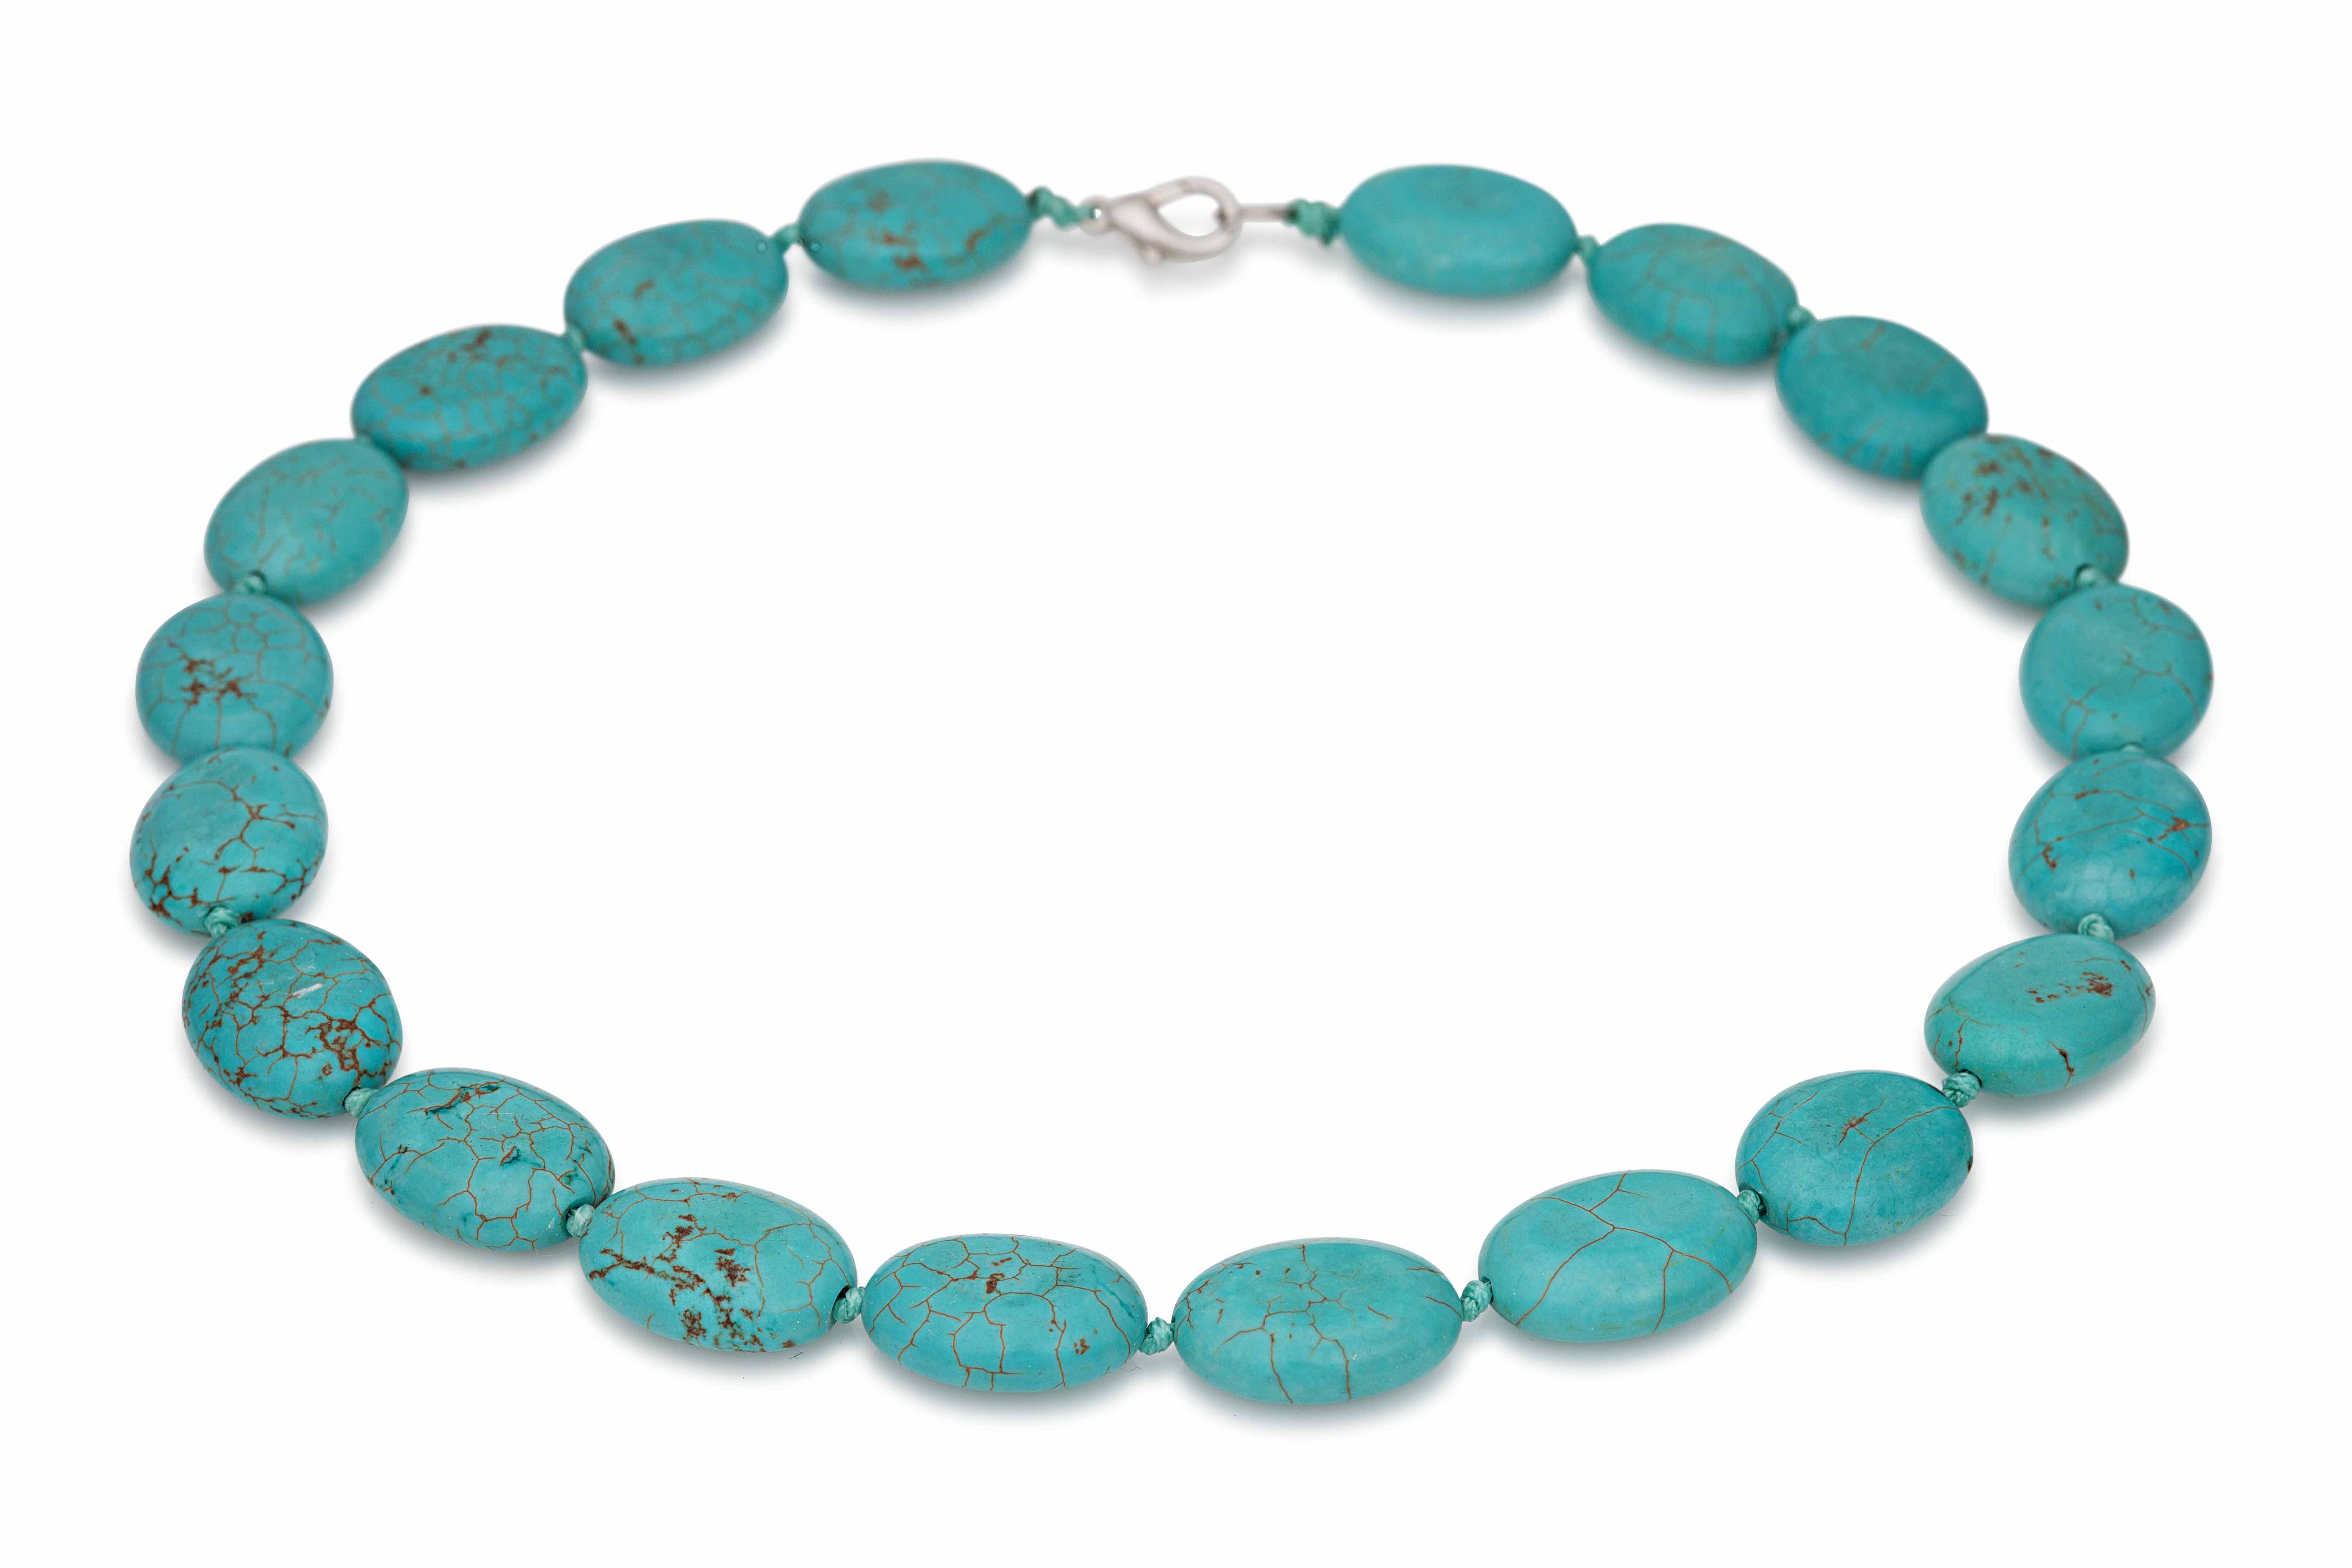 Semi precious genuine turquoise circular round shape stone choker necklace 